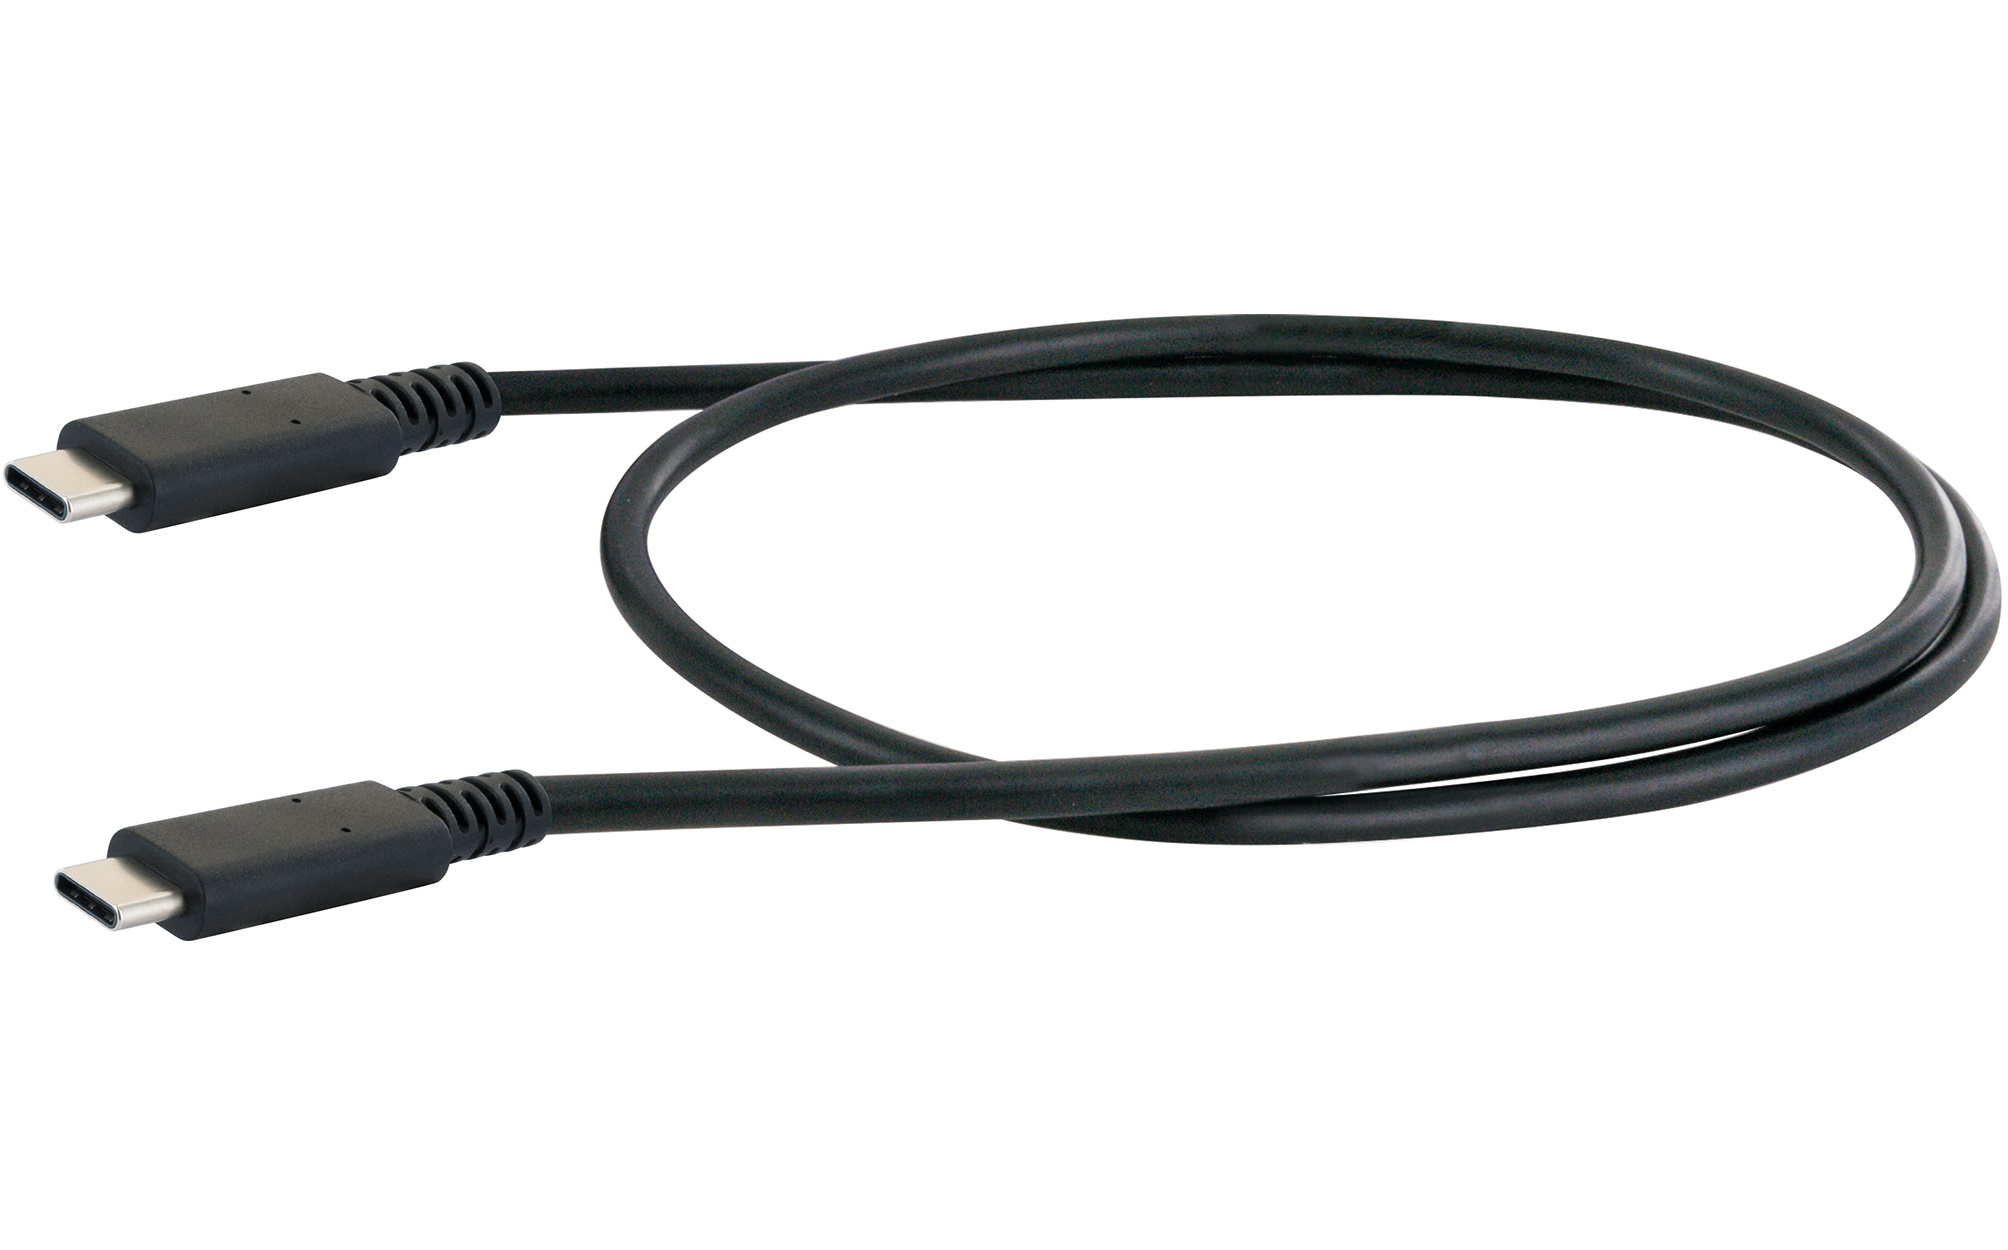 SCHWAIGER -CK4141 053- USB-C Kabel